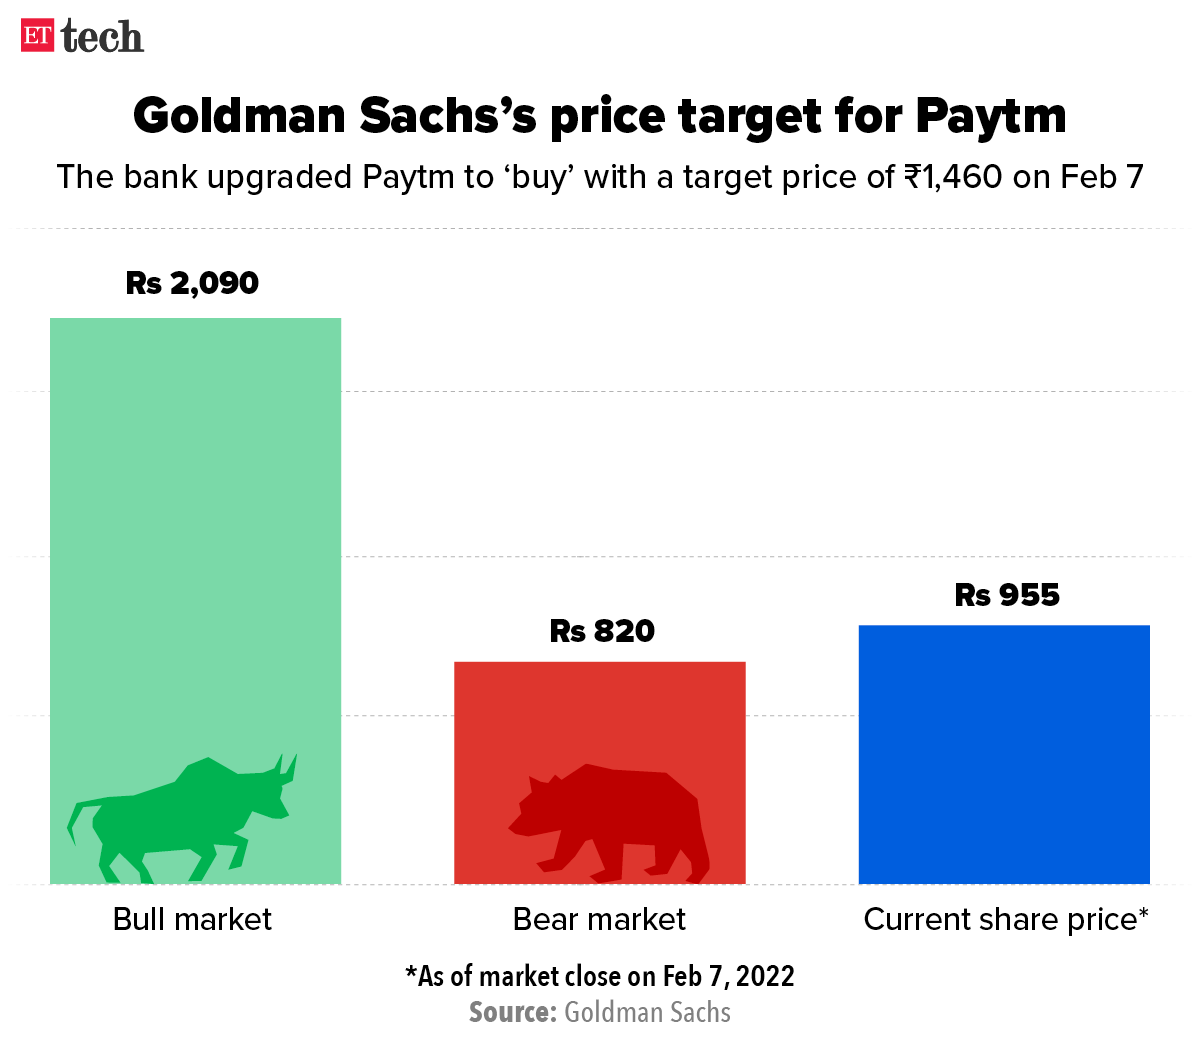 Goldman Sachs’s price target for Paytm